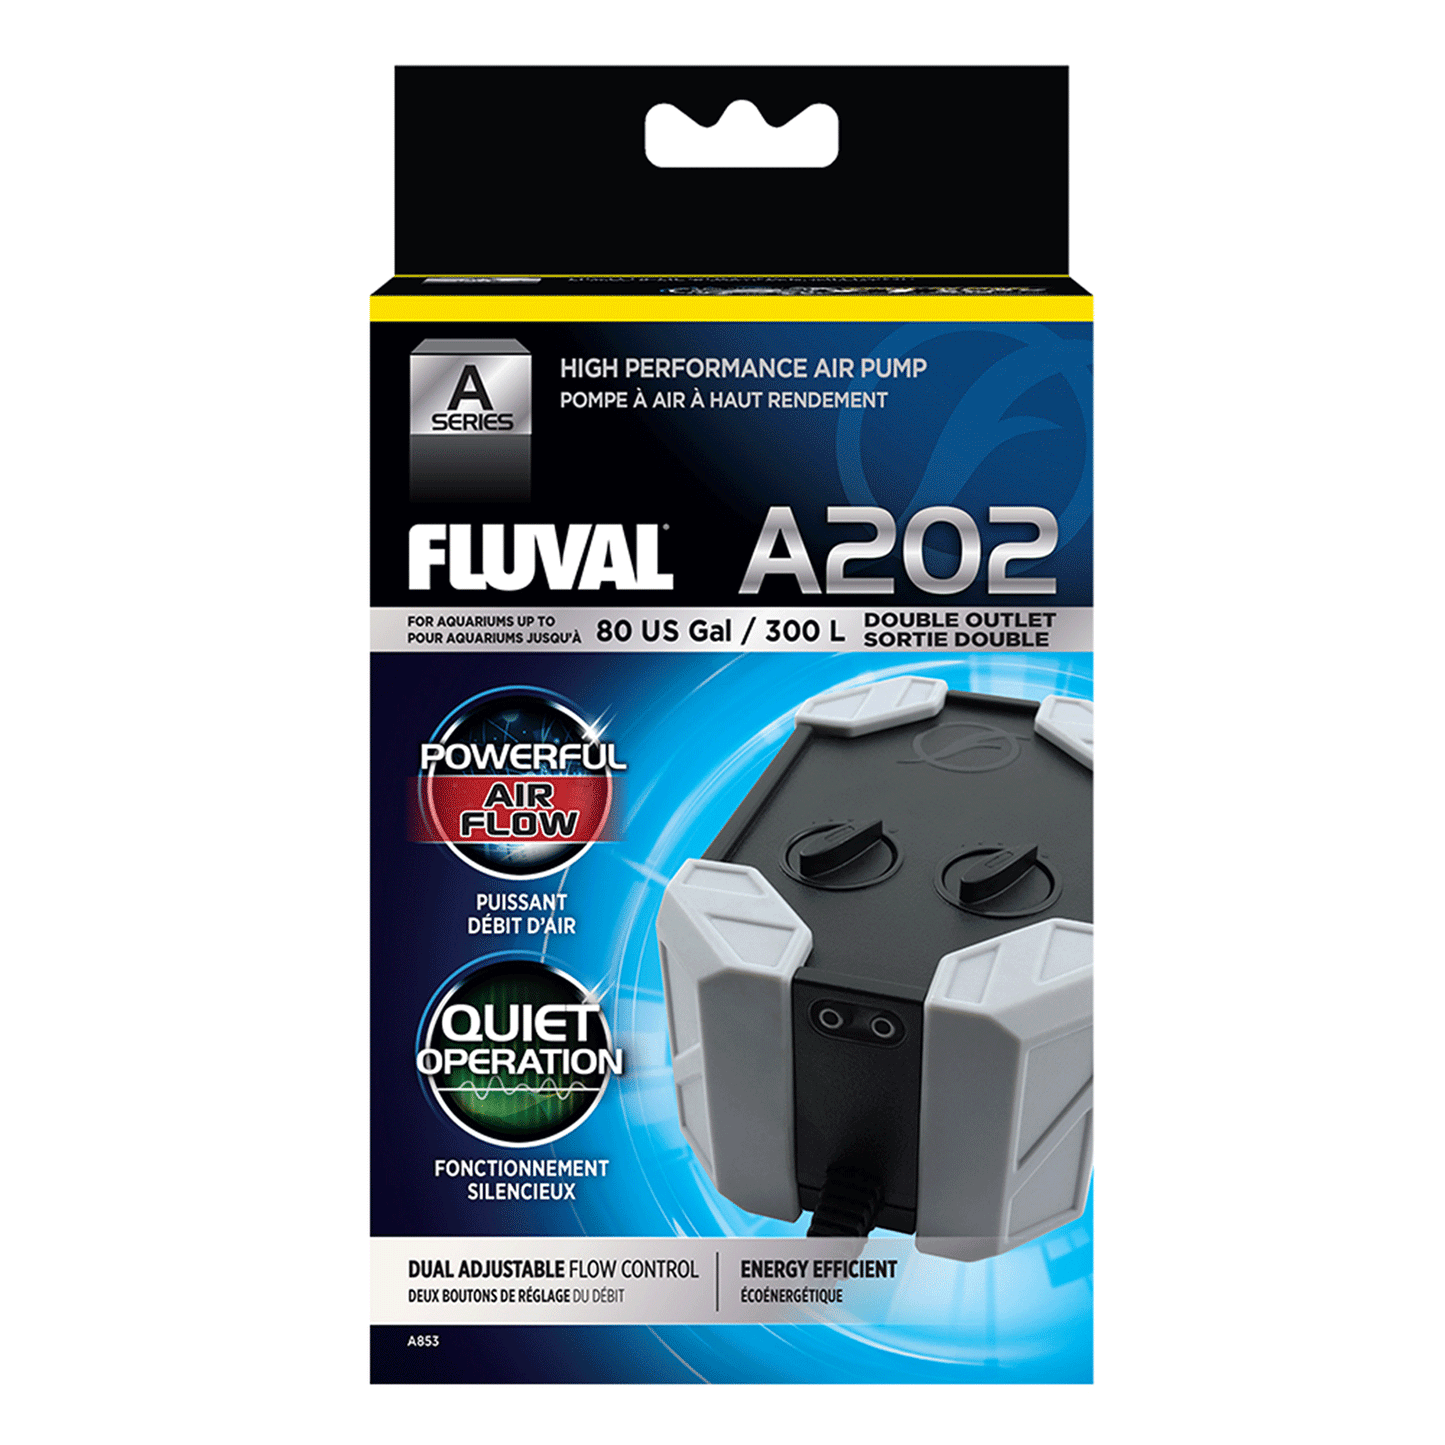 Fluval A202 Series Air Pump 180-220 LPH - 80 US Gal/ 300L - Double Outlet 3W